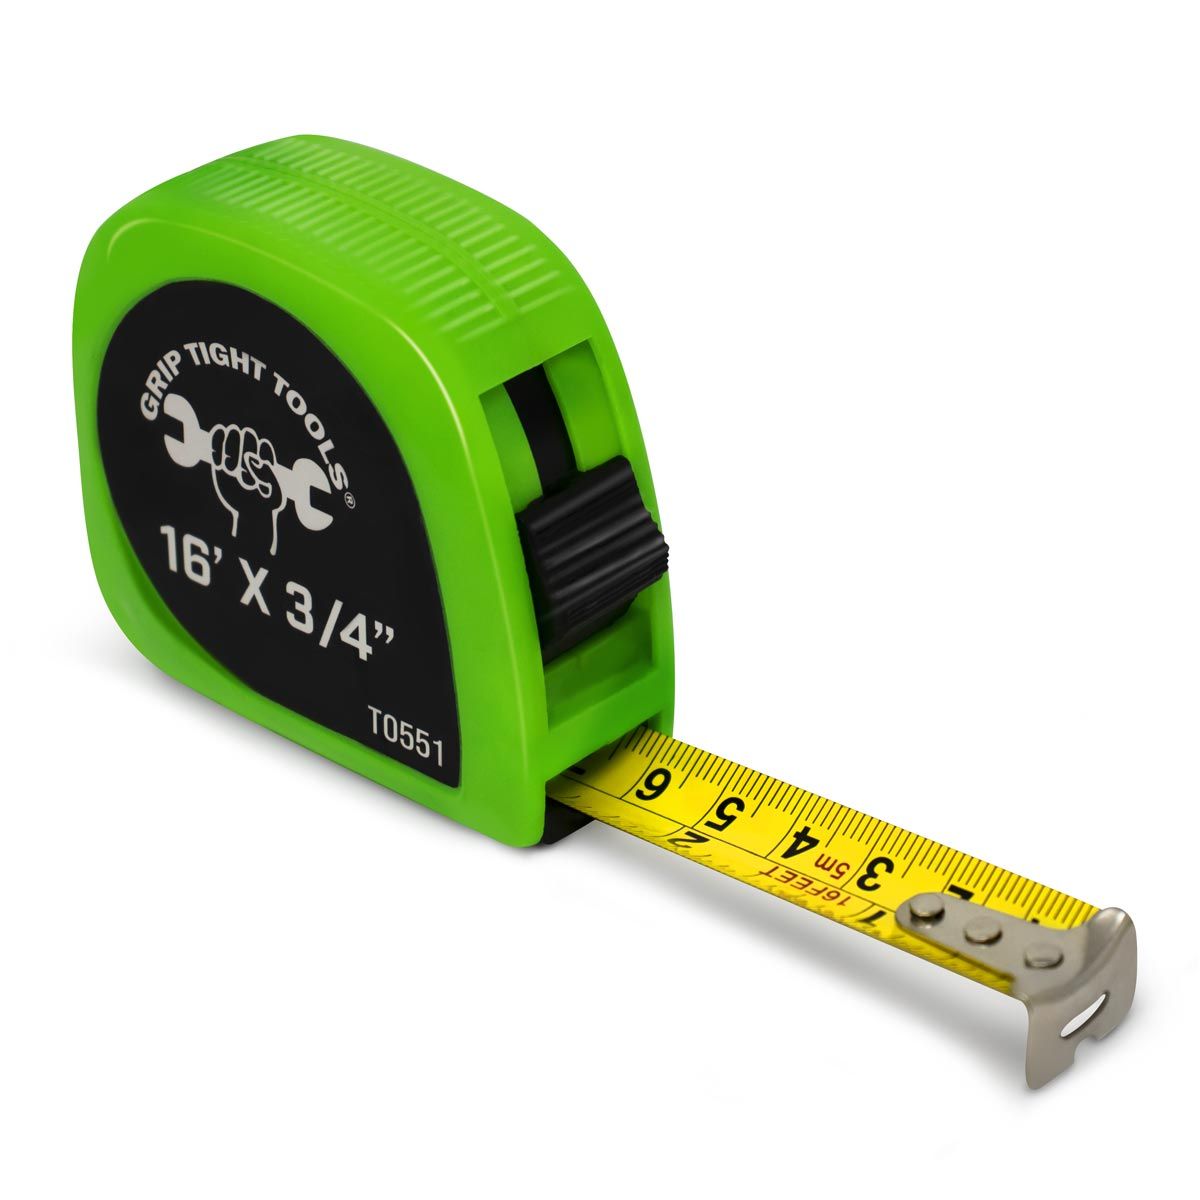 t0551-metric_sae-power-tape-measure-1